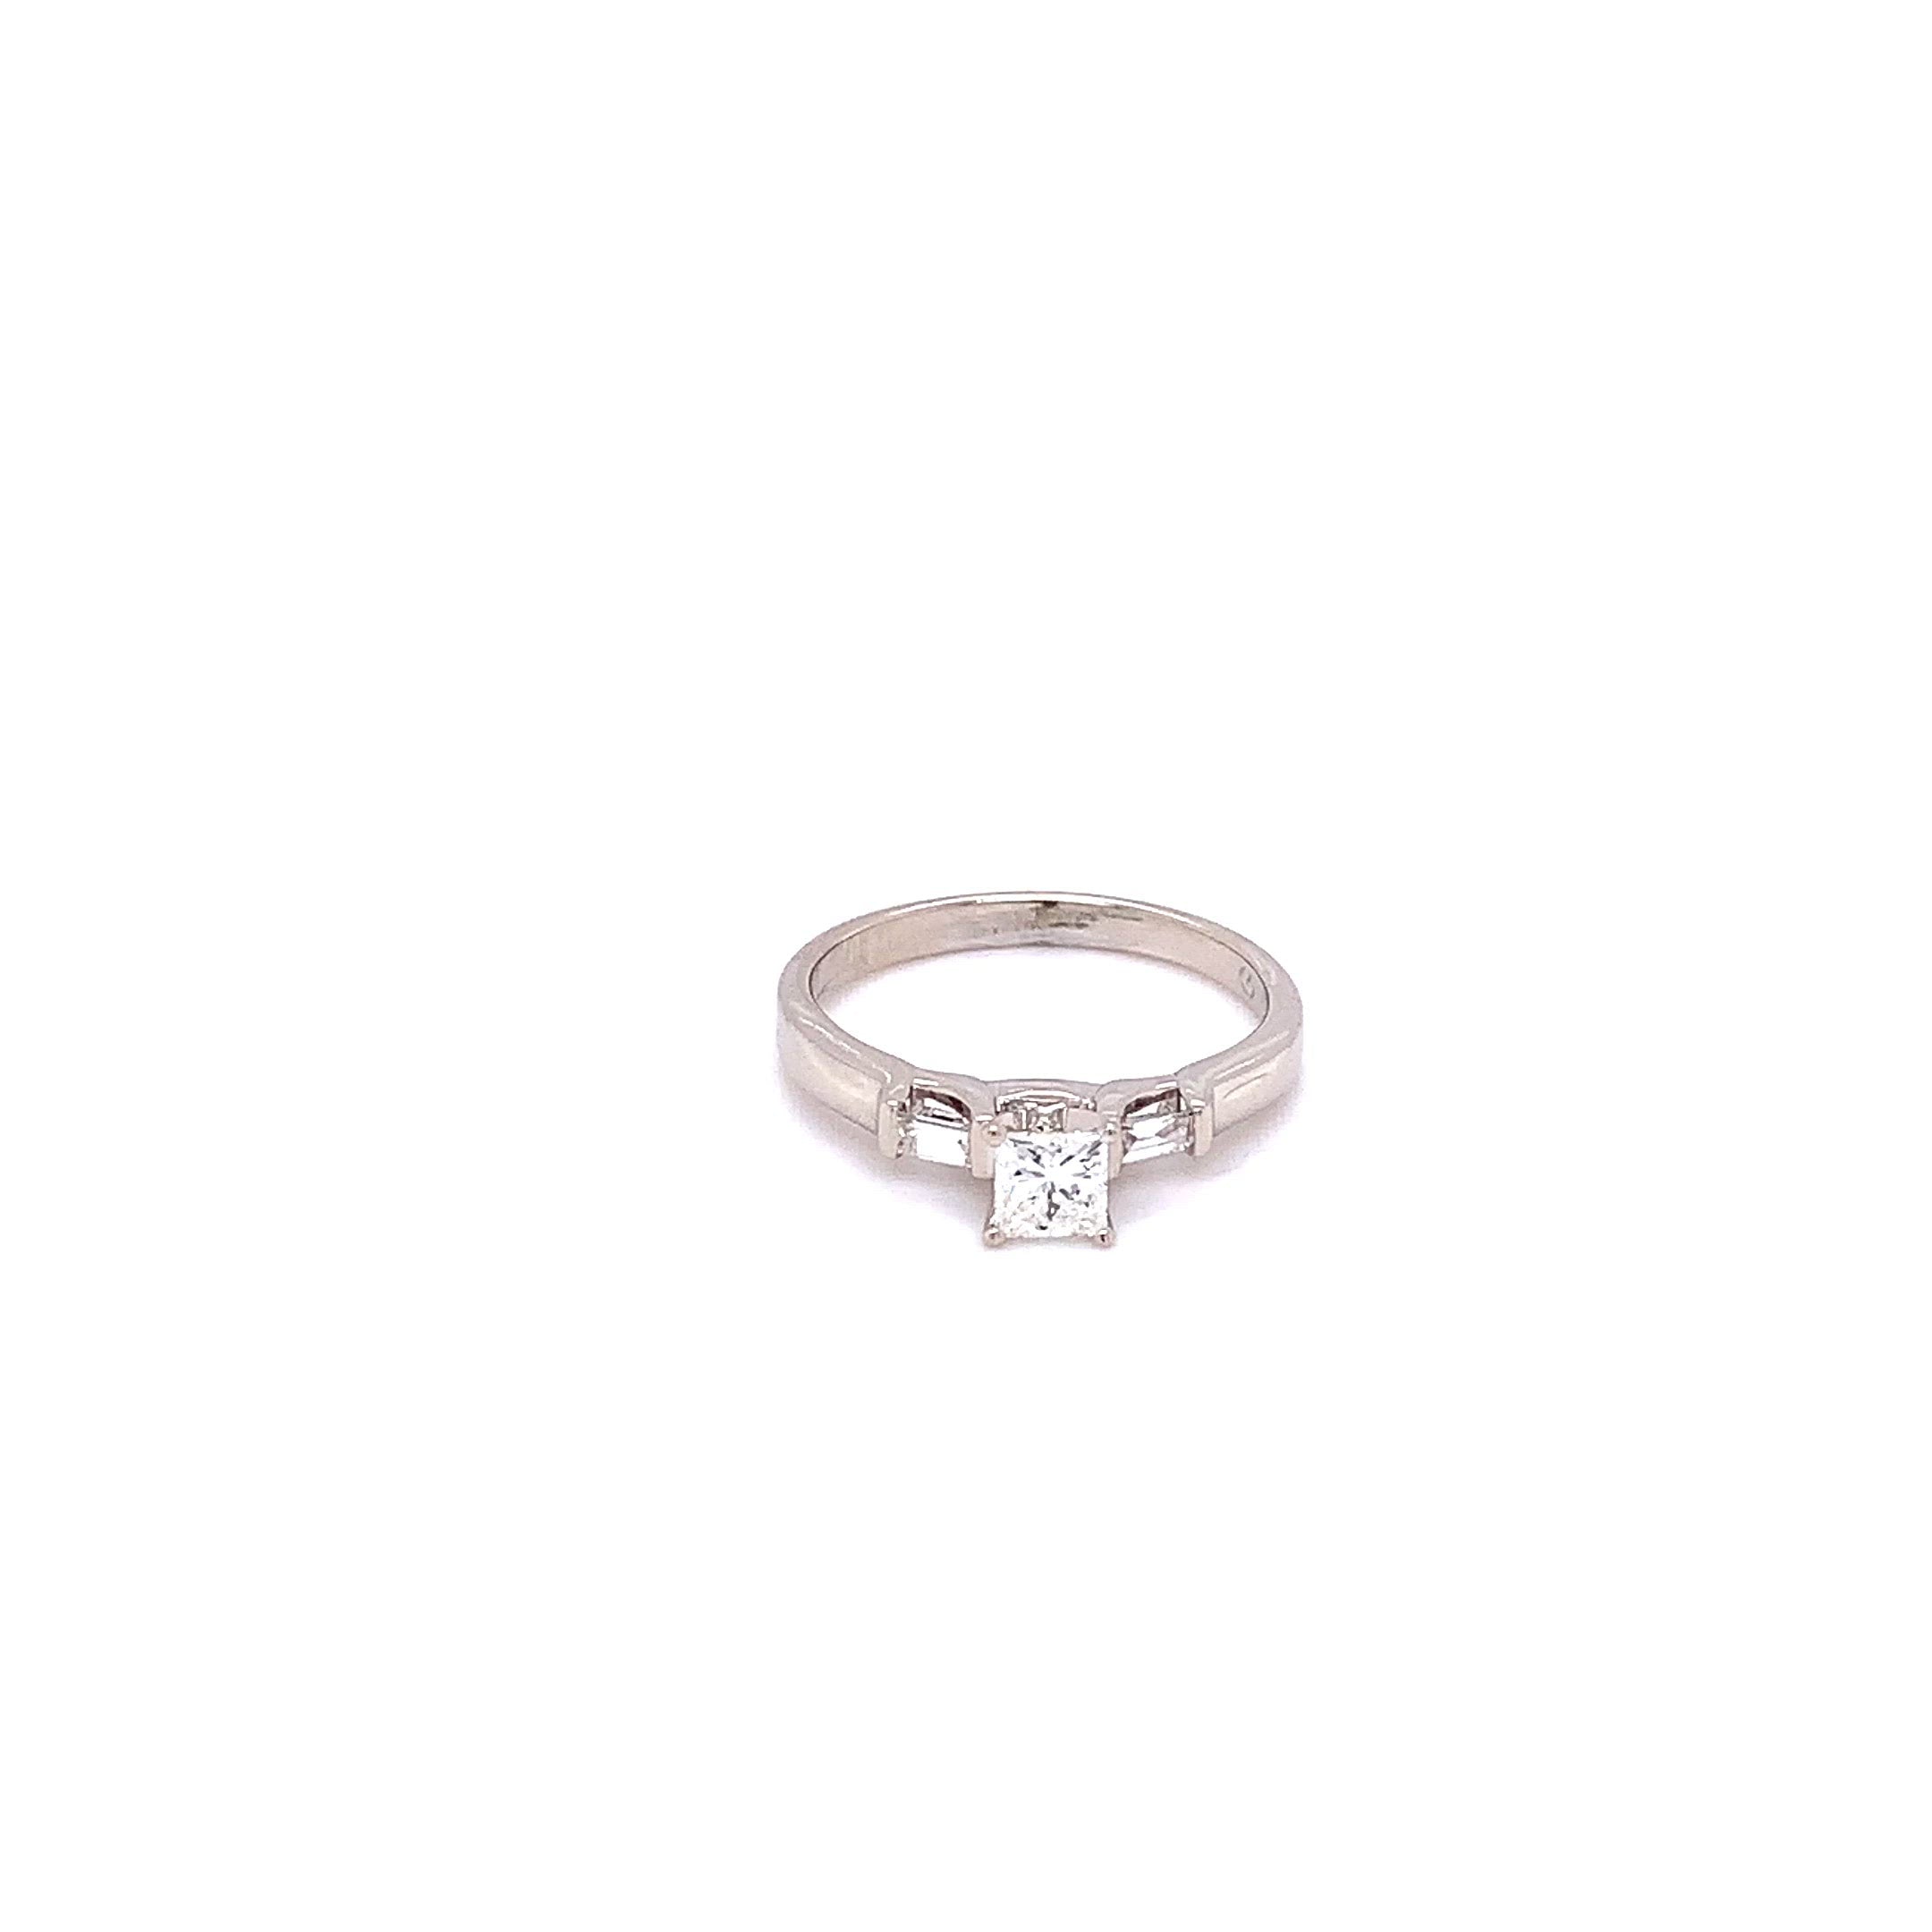 Natural Diamond Ring 14K Solid White Gold .64tcw Statement Ring Engagement Ring Wedding Ring Bridal Jewelry Ladies Ring Women's Ring Estate